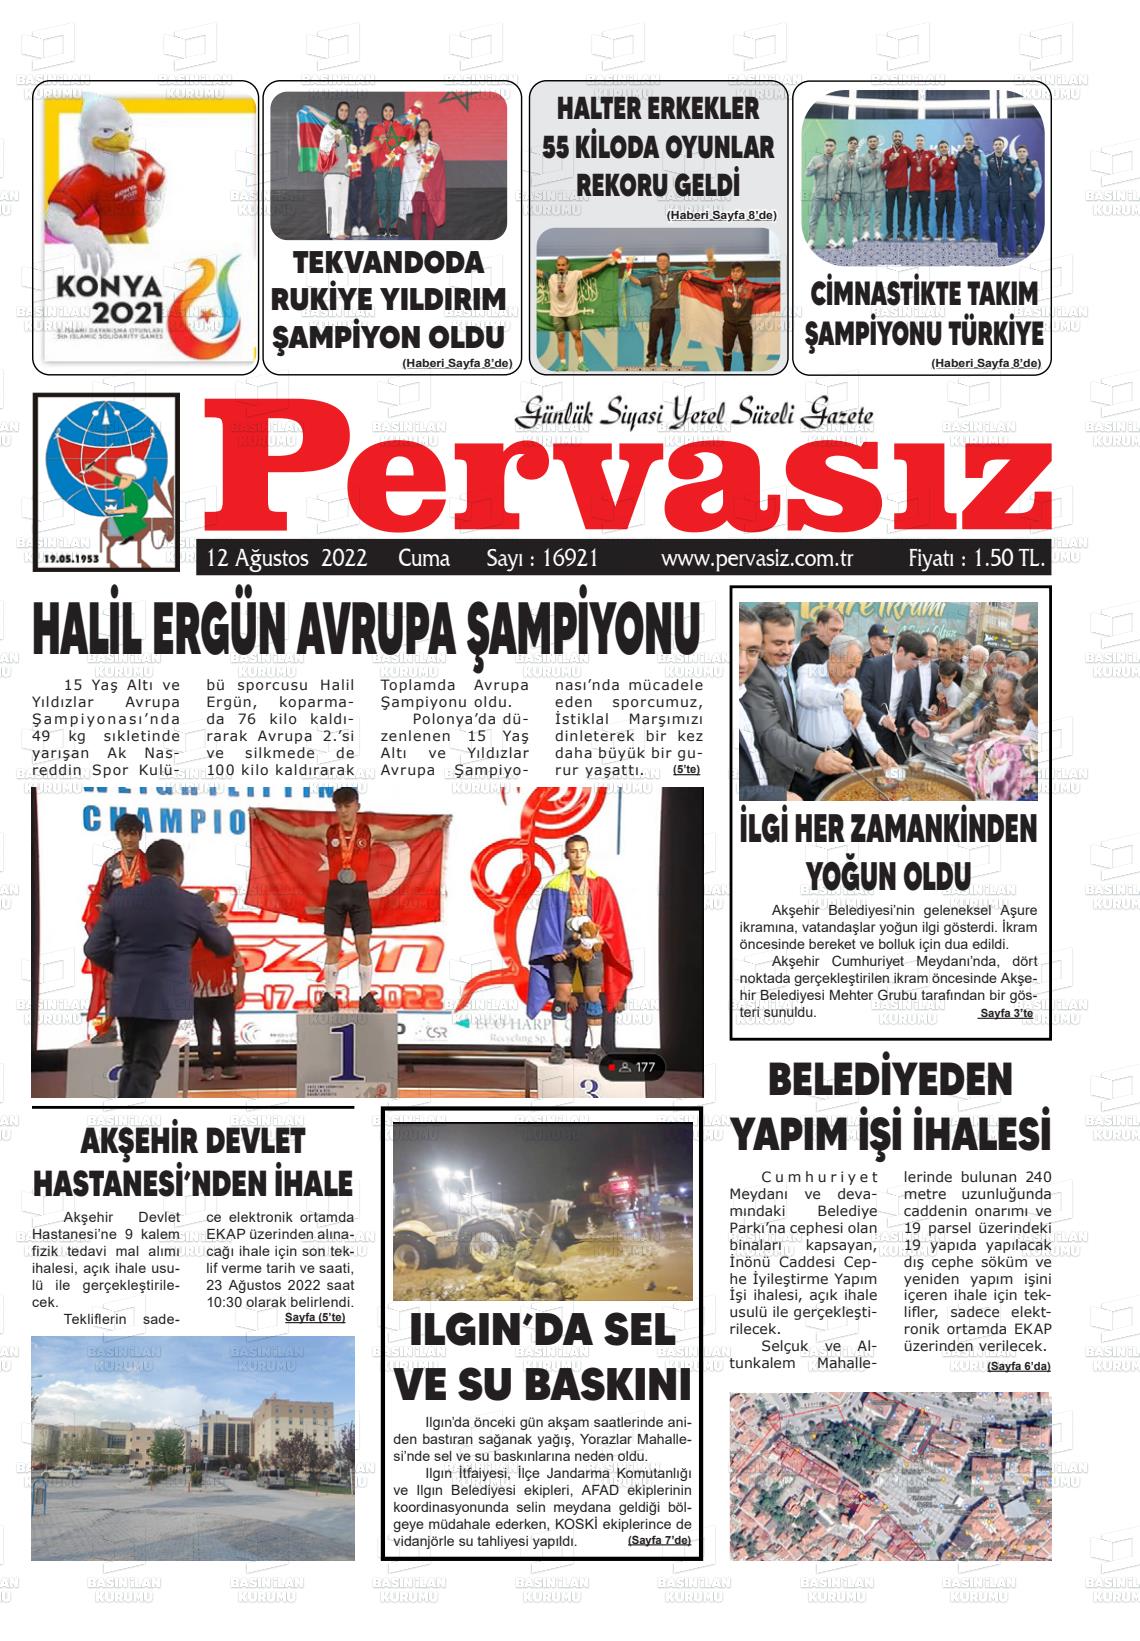 12 Ağustos 2022 Konya Pervasız Gazete Manşeti